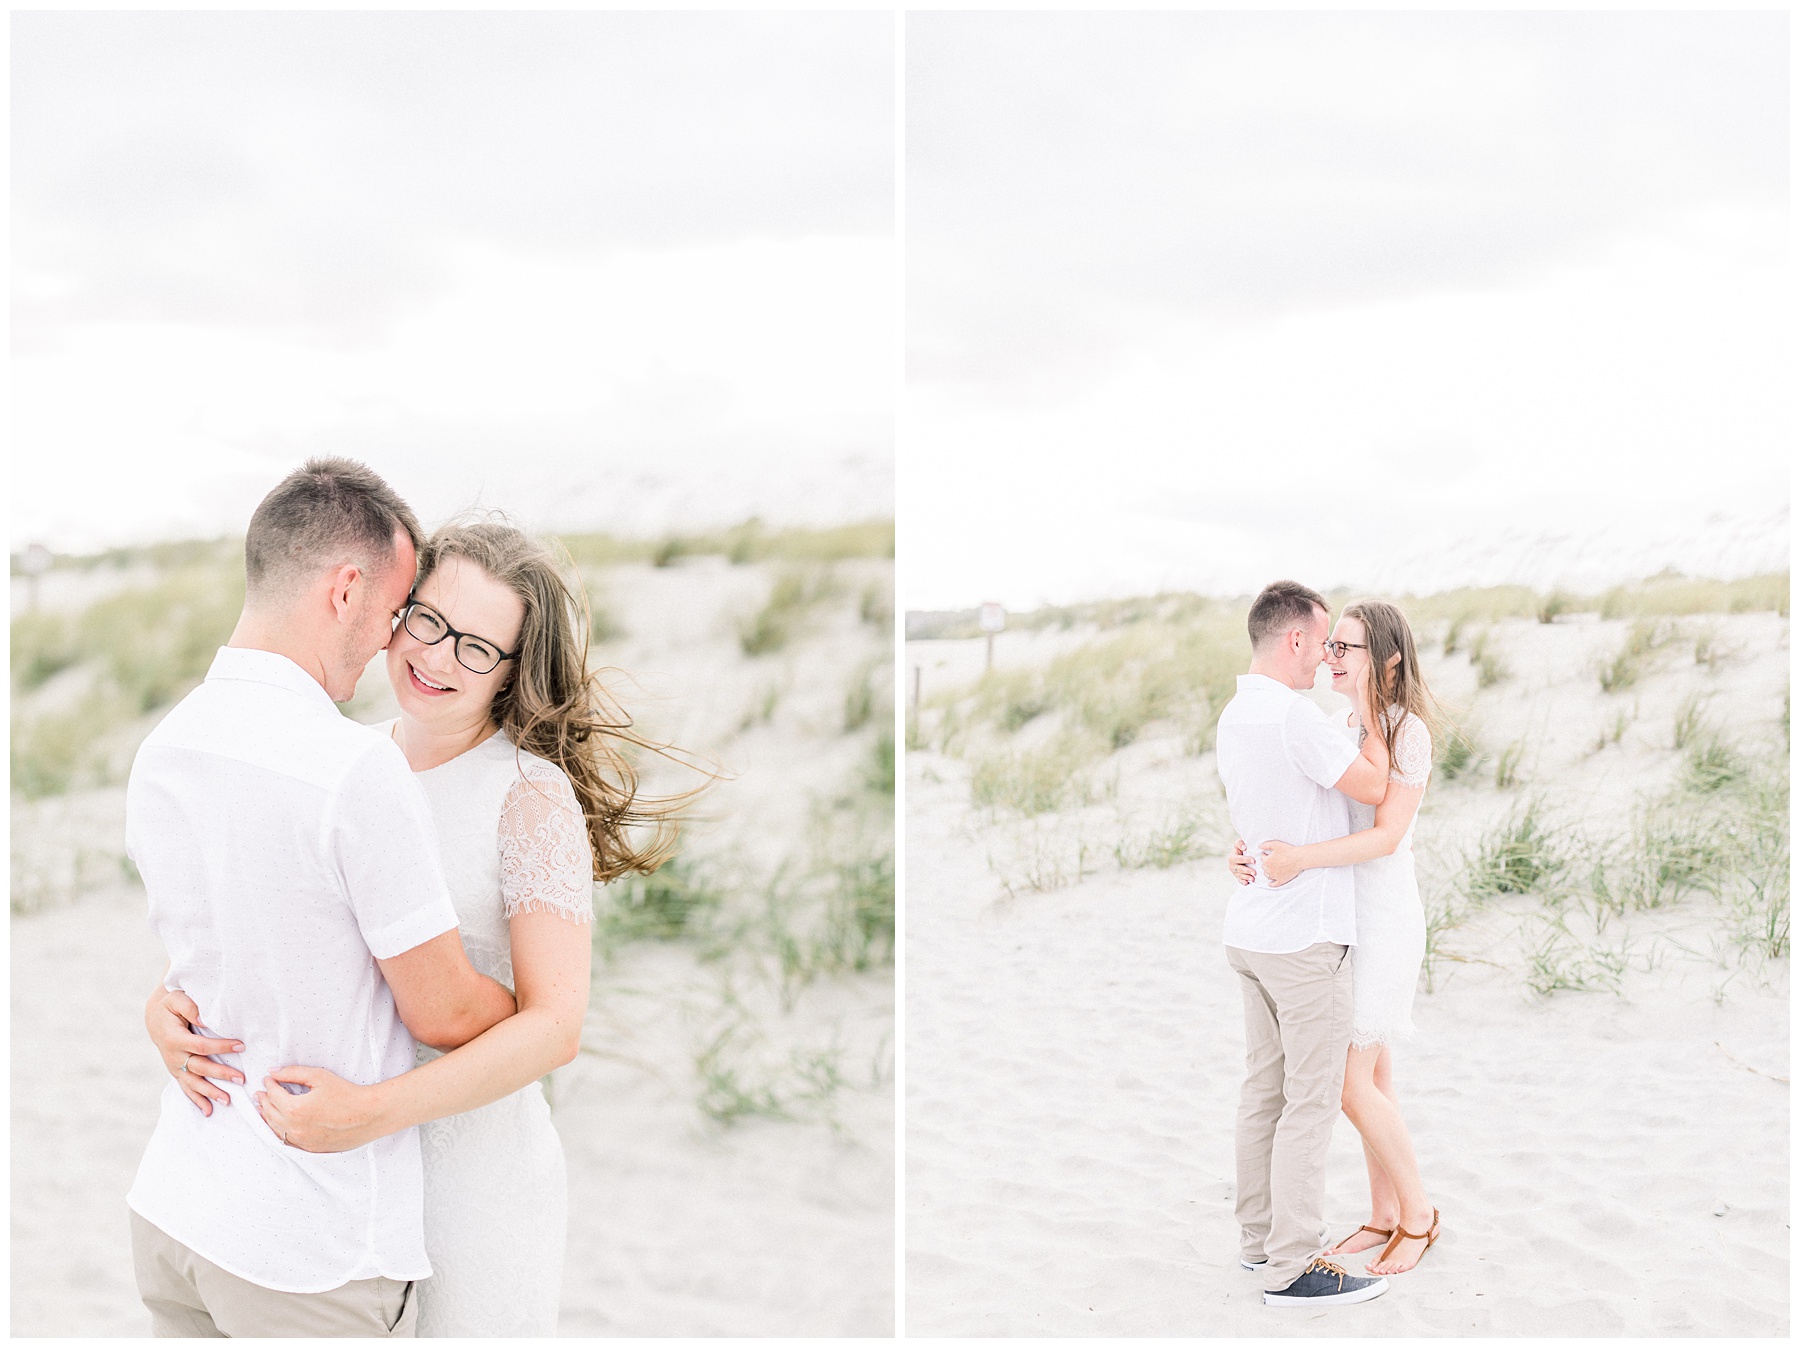 21 Main Events at North Beach Engagement Session. Amanda Eloise Photography. North Carolina Wedding Photographer. Myrtle Beach Photographer